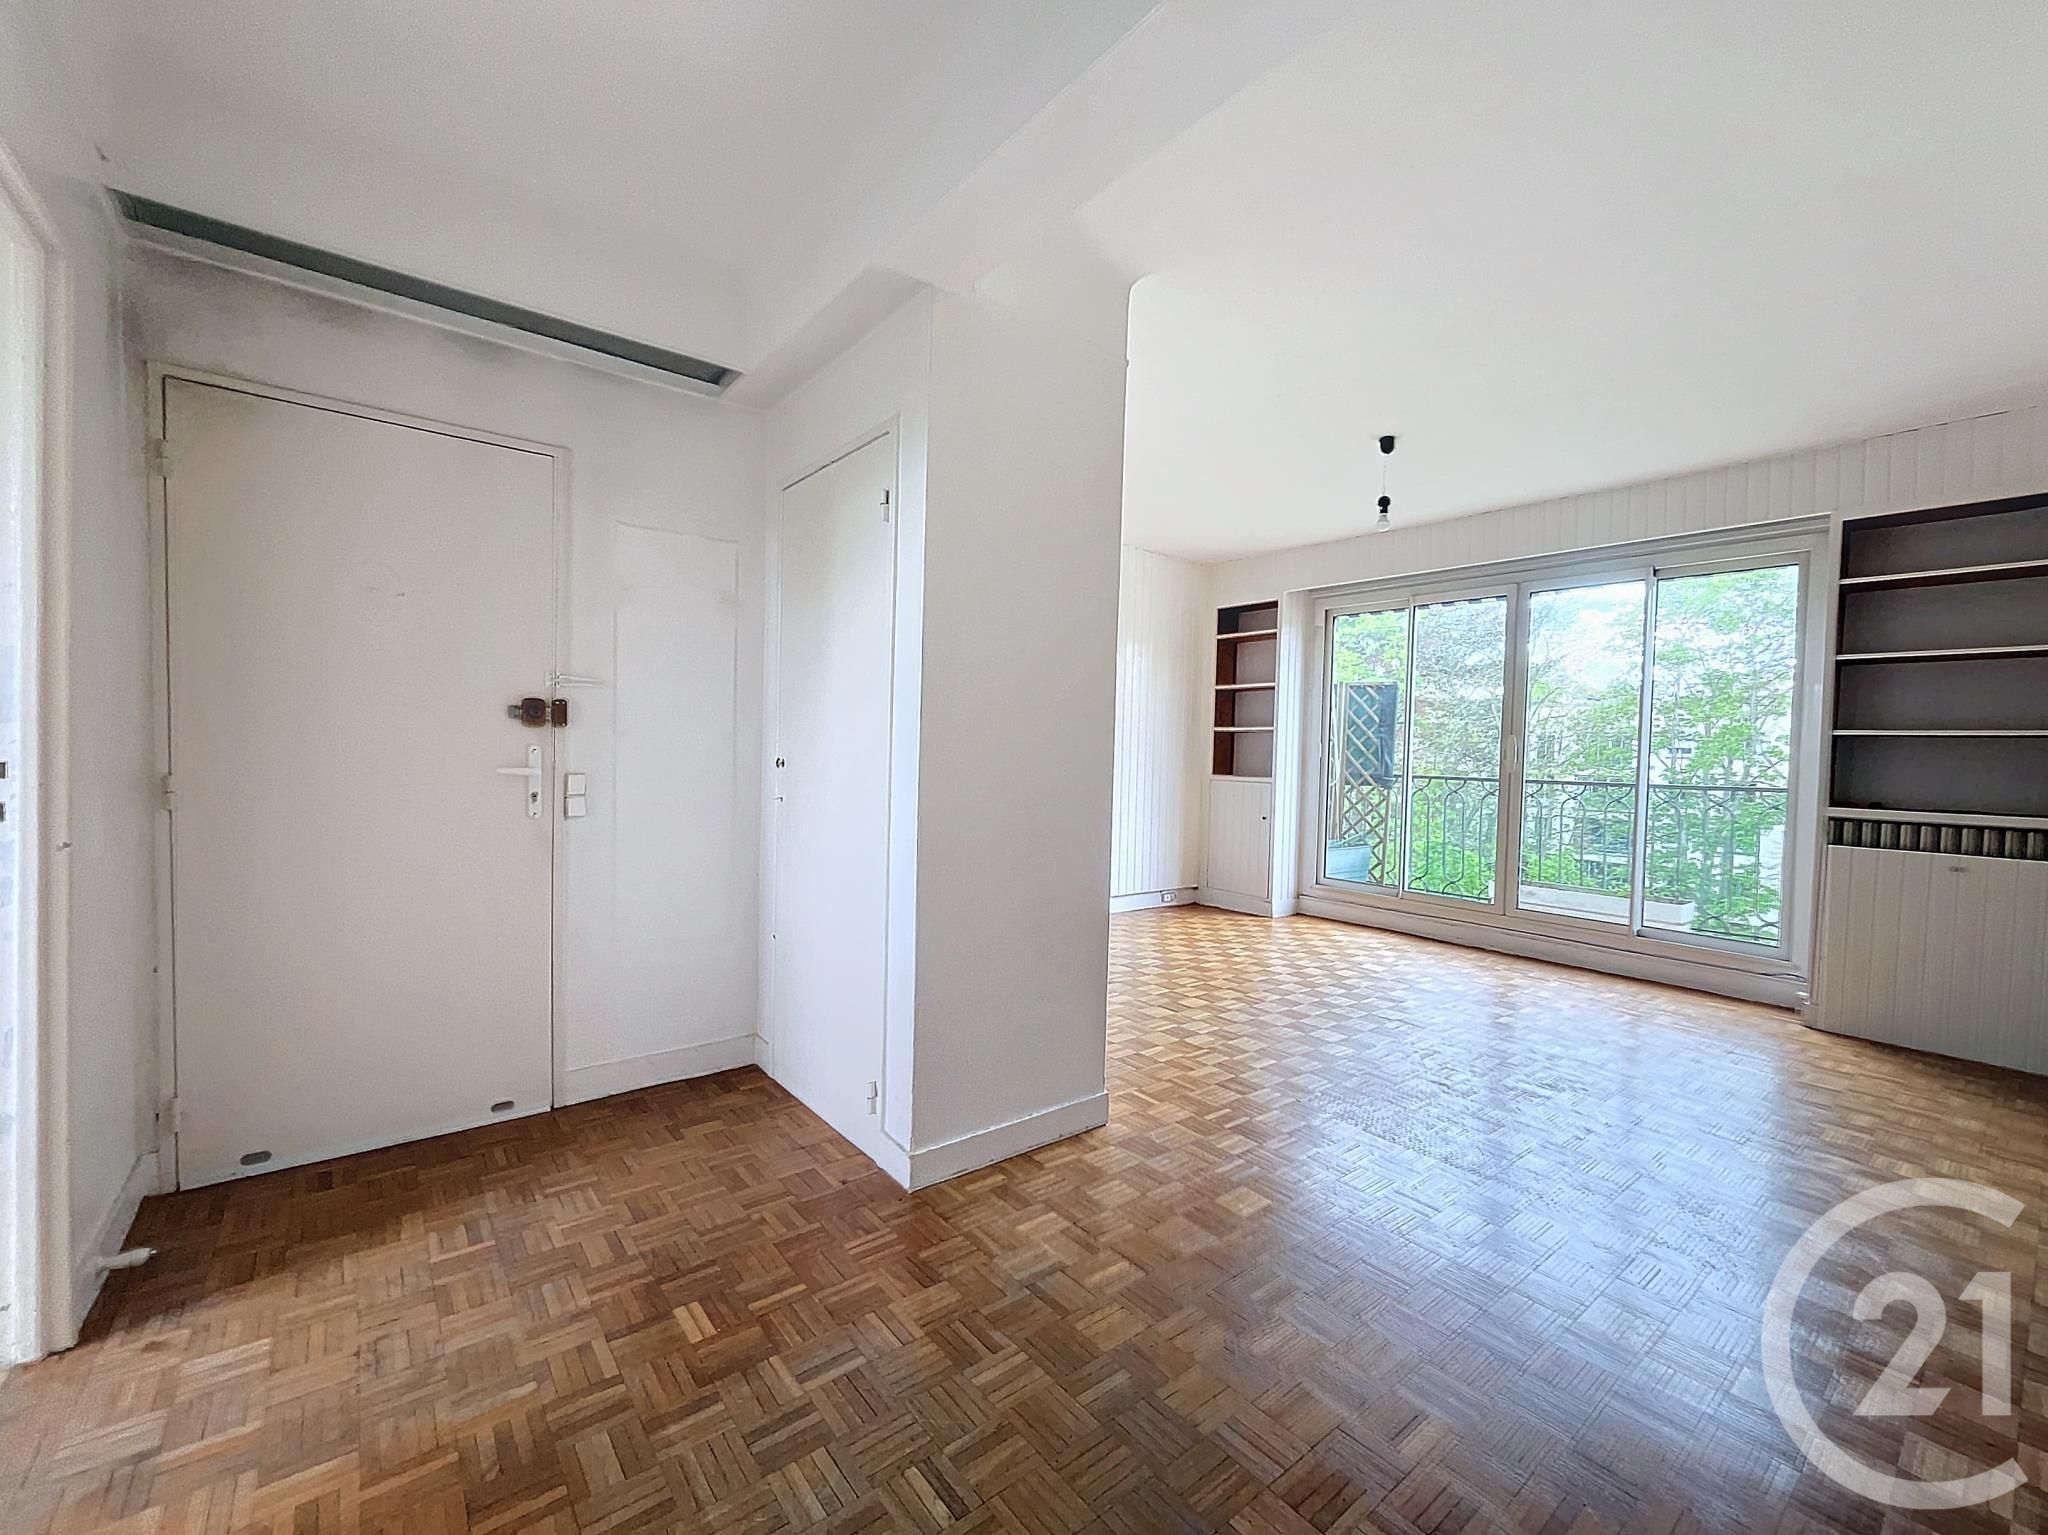 Appartement a louer ville-d'avray - 3 pièce(s) - 75.85 m2 - Surfyn